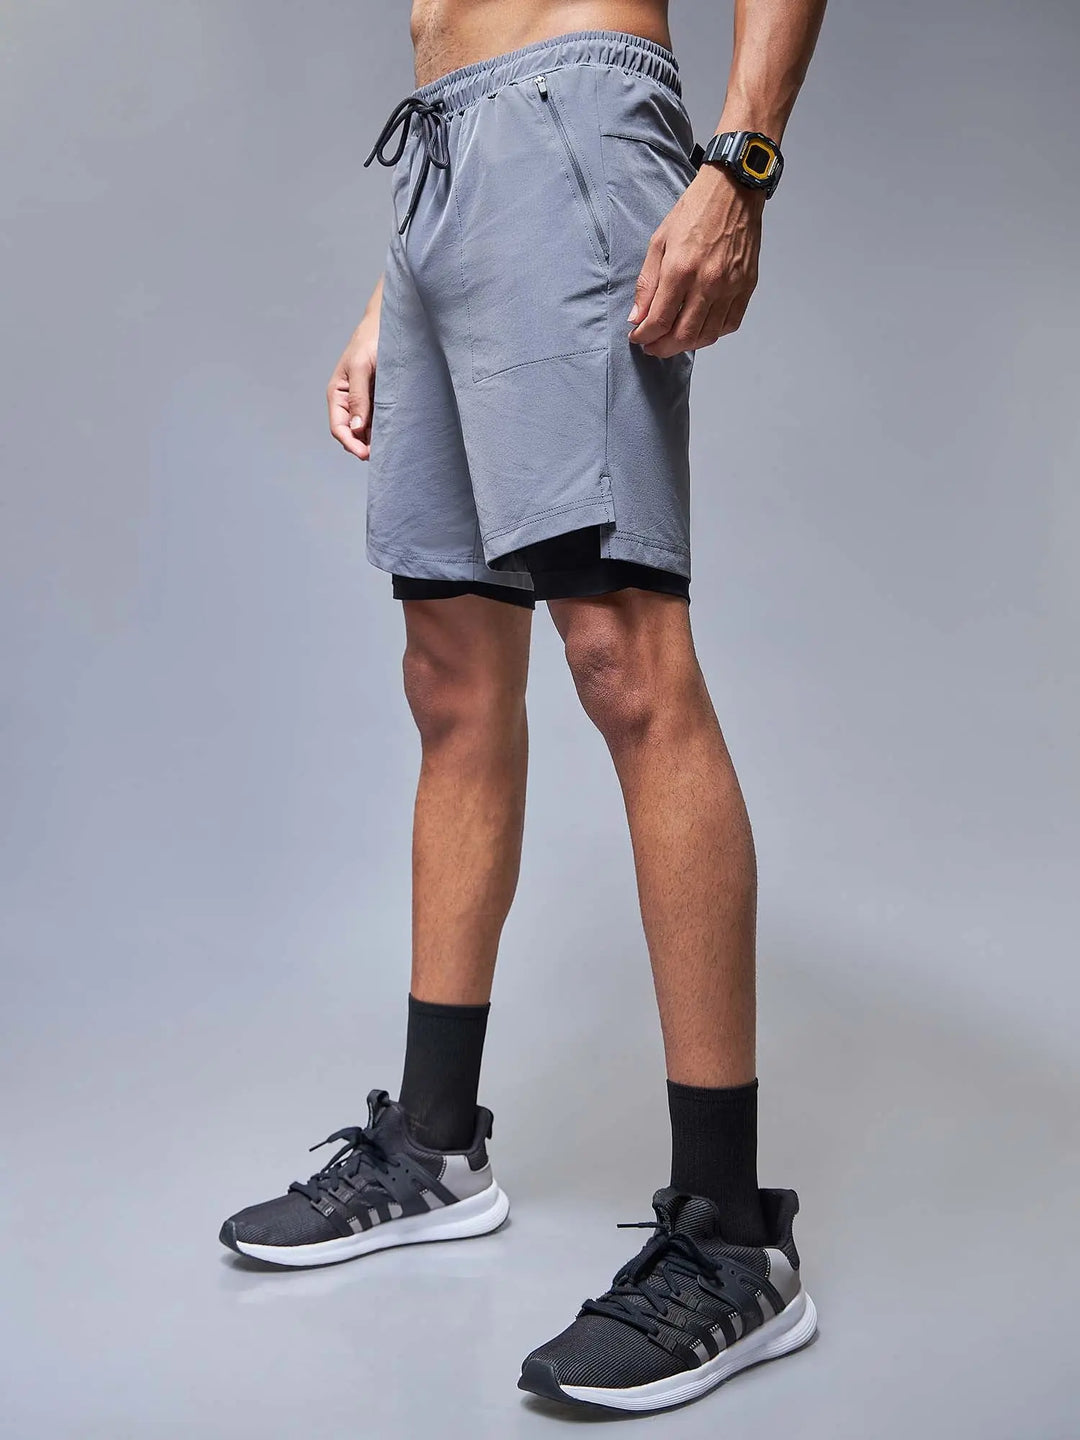 Flex Fit Grey Shorts CAVA athleisure